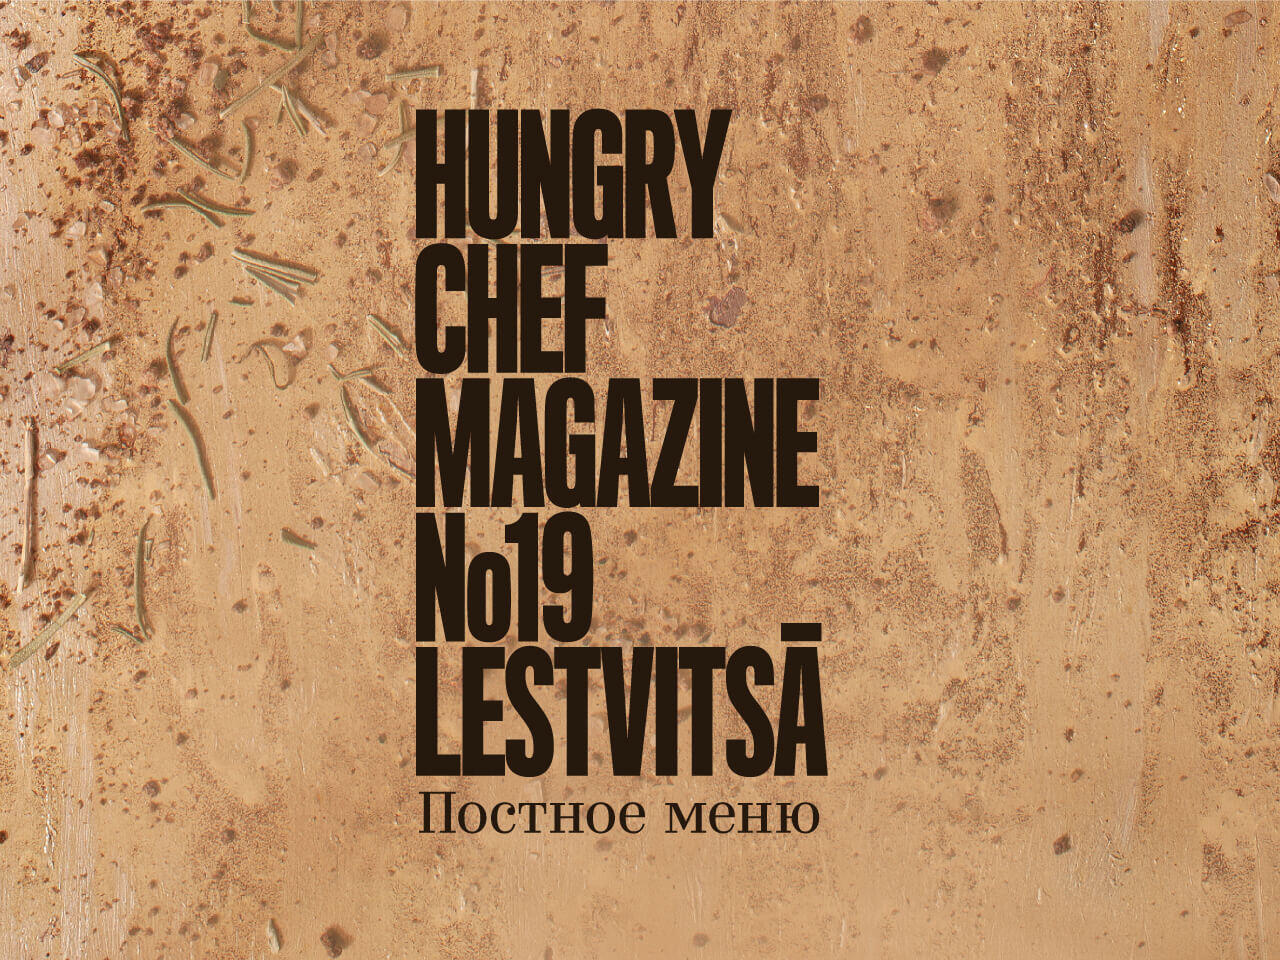 Hungry Chef Magazine №19 Lestvitsa